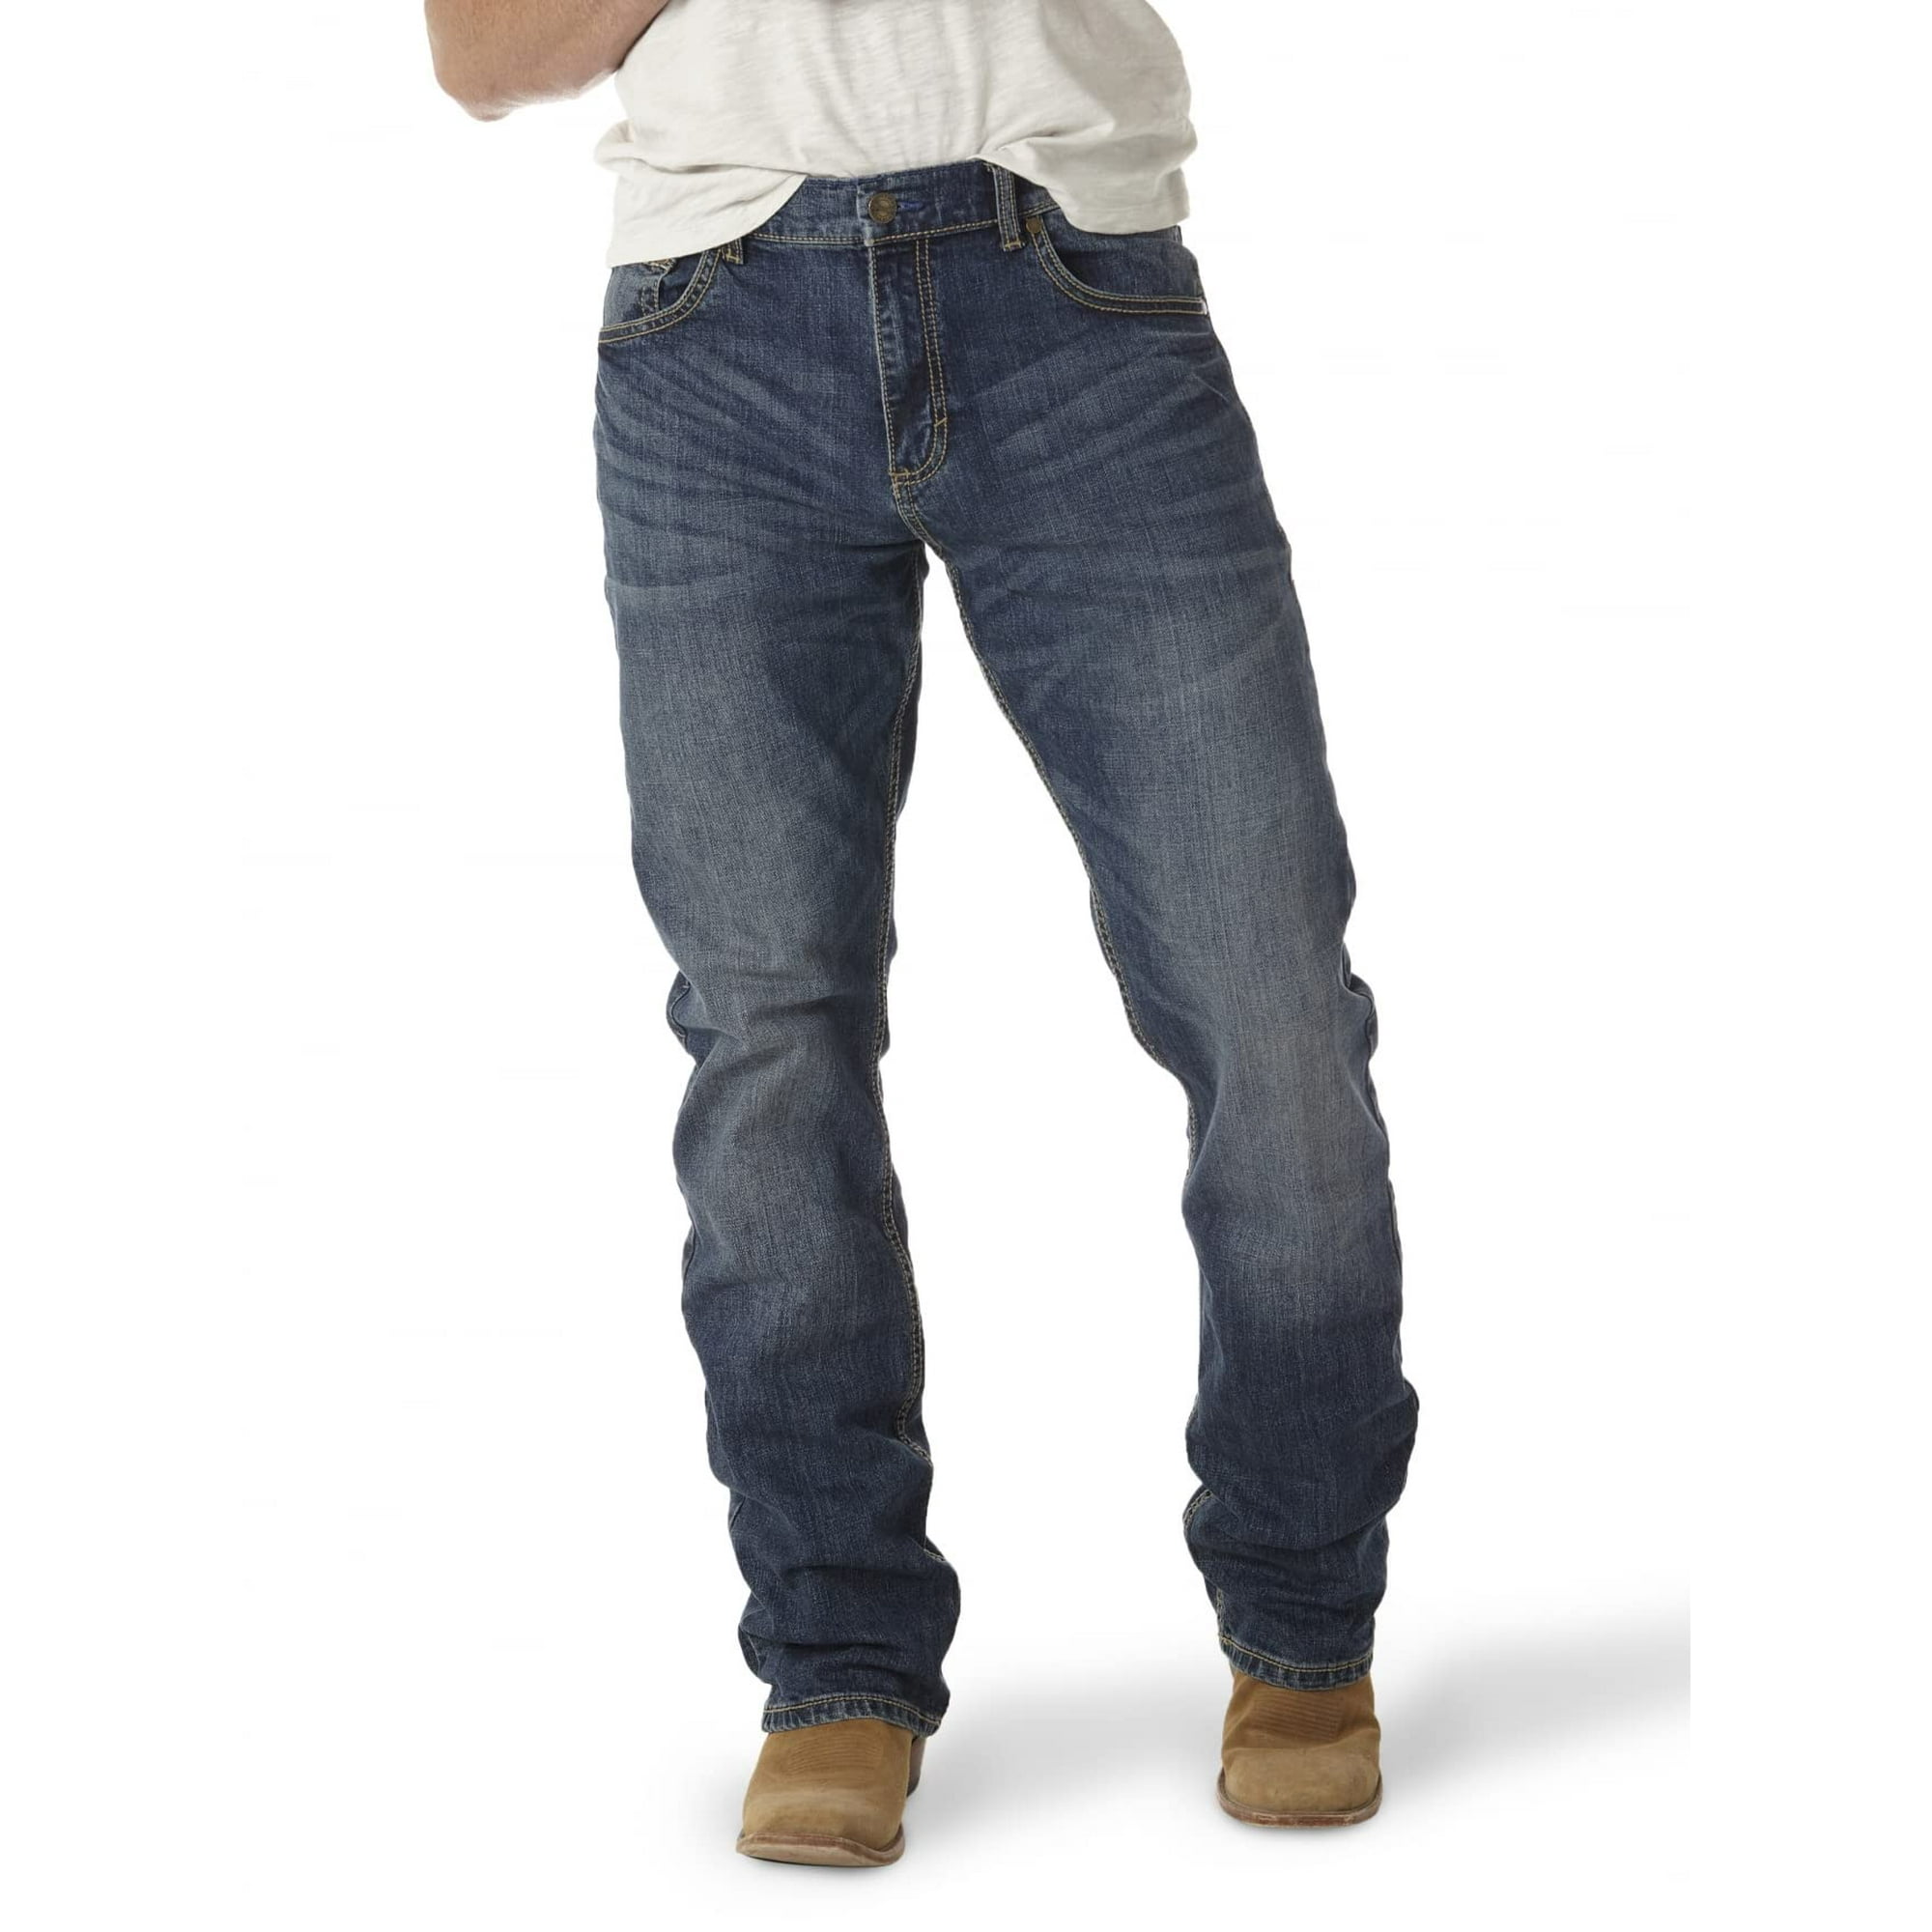 Wrangler Men's Retro Slim Fit Boot Cut Jeans, Layton, 33x32 | Walmart Canada